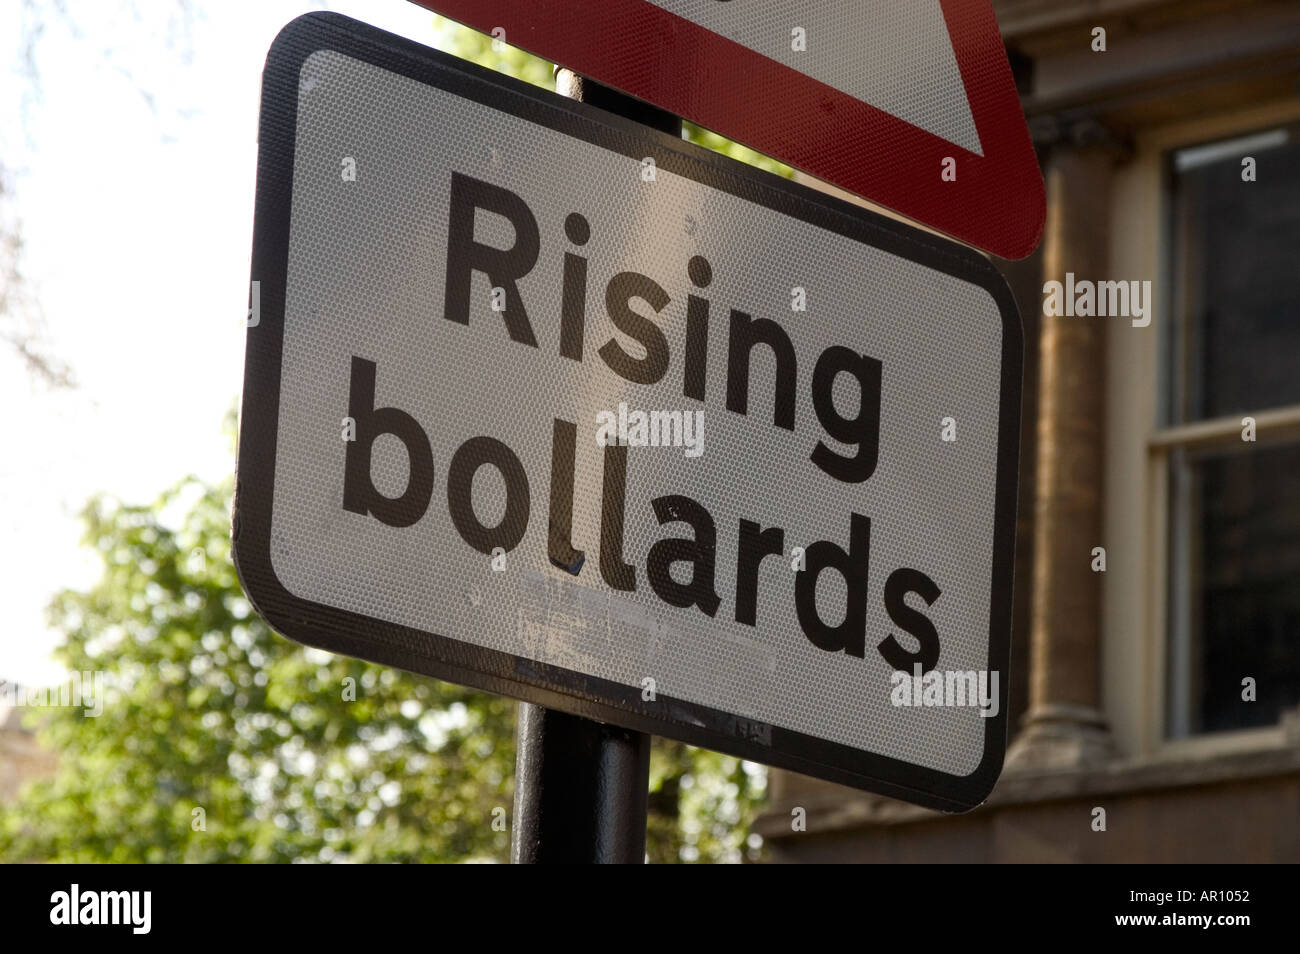 rising bollards street sign Stock Photo - Alamy